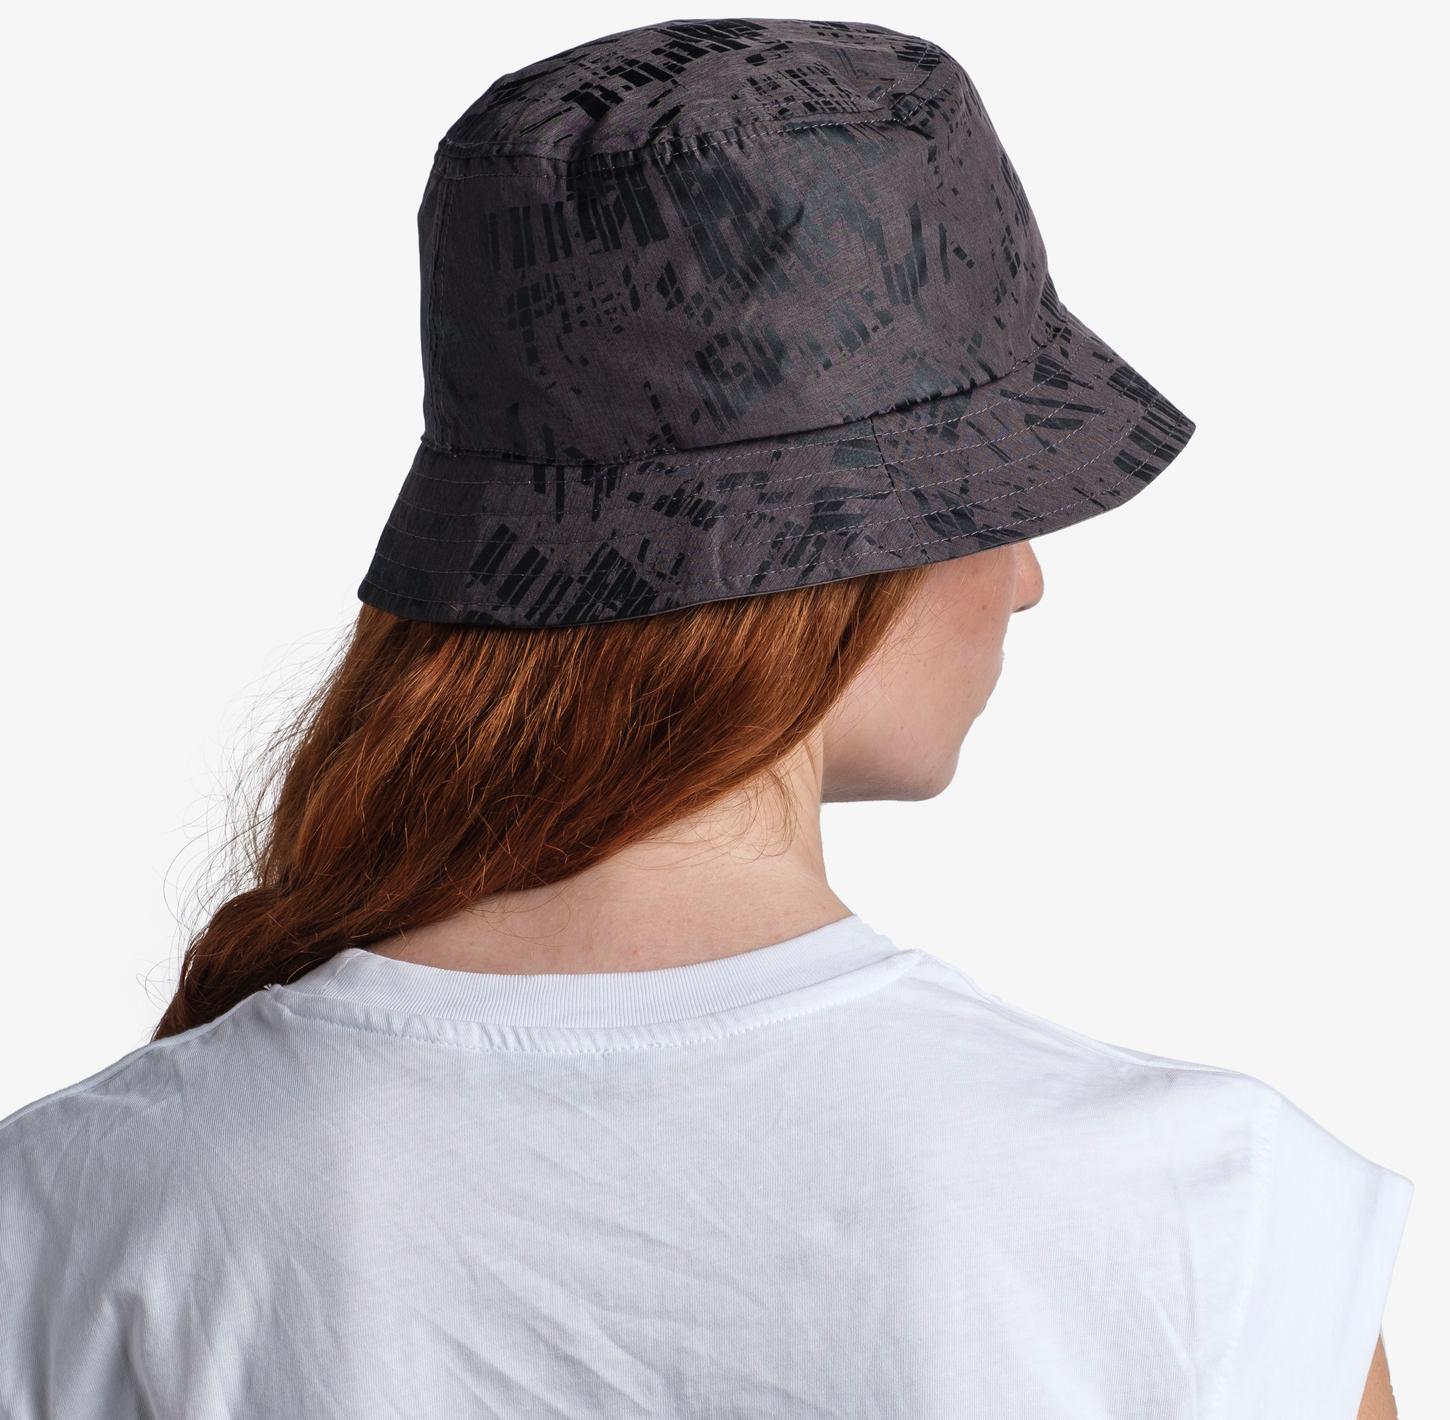 Панама Buff Travel Bucket Hat Gline Black-Grey